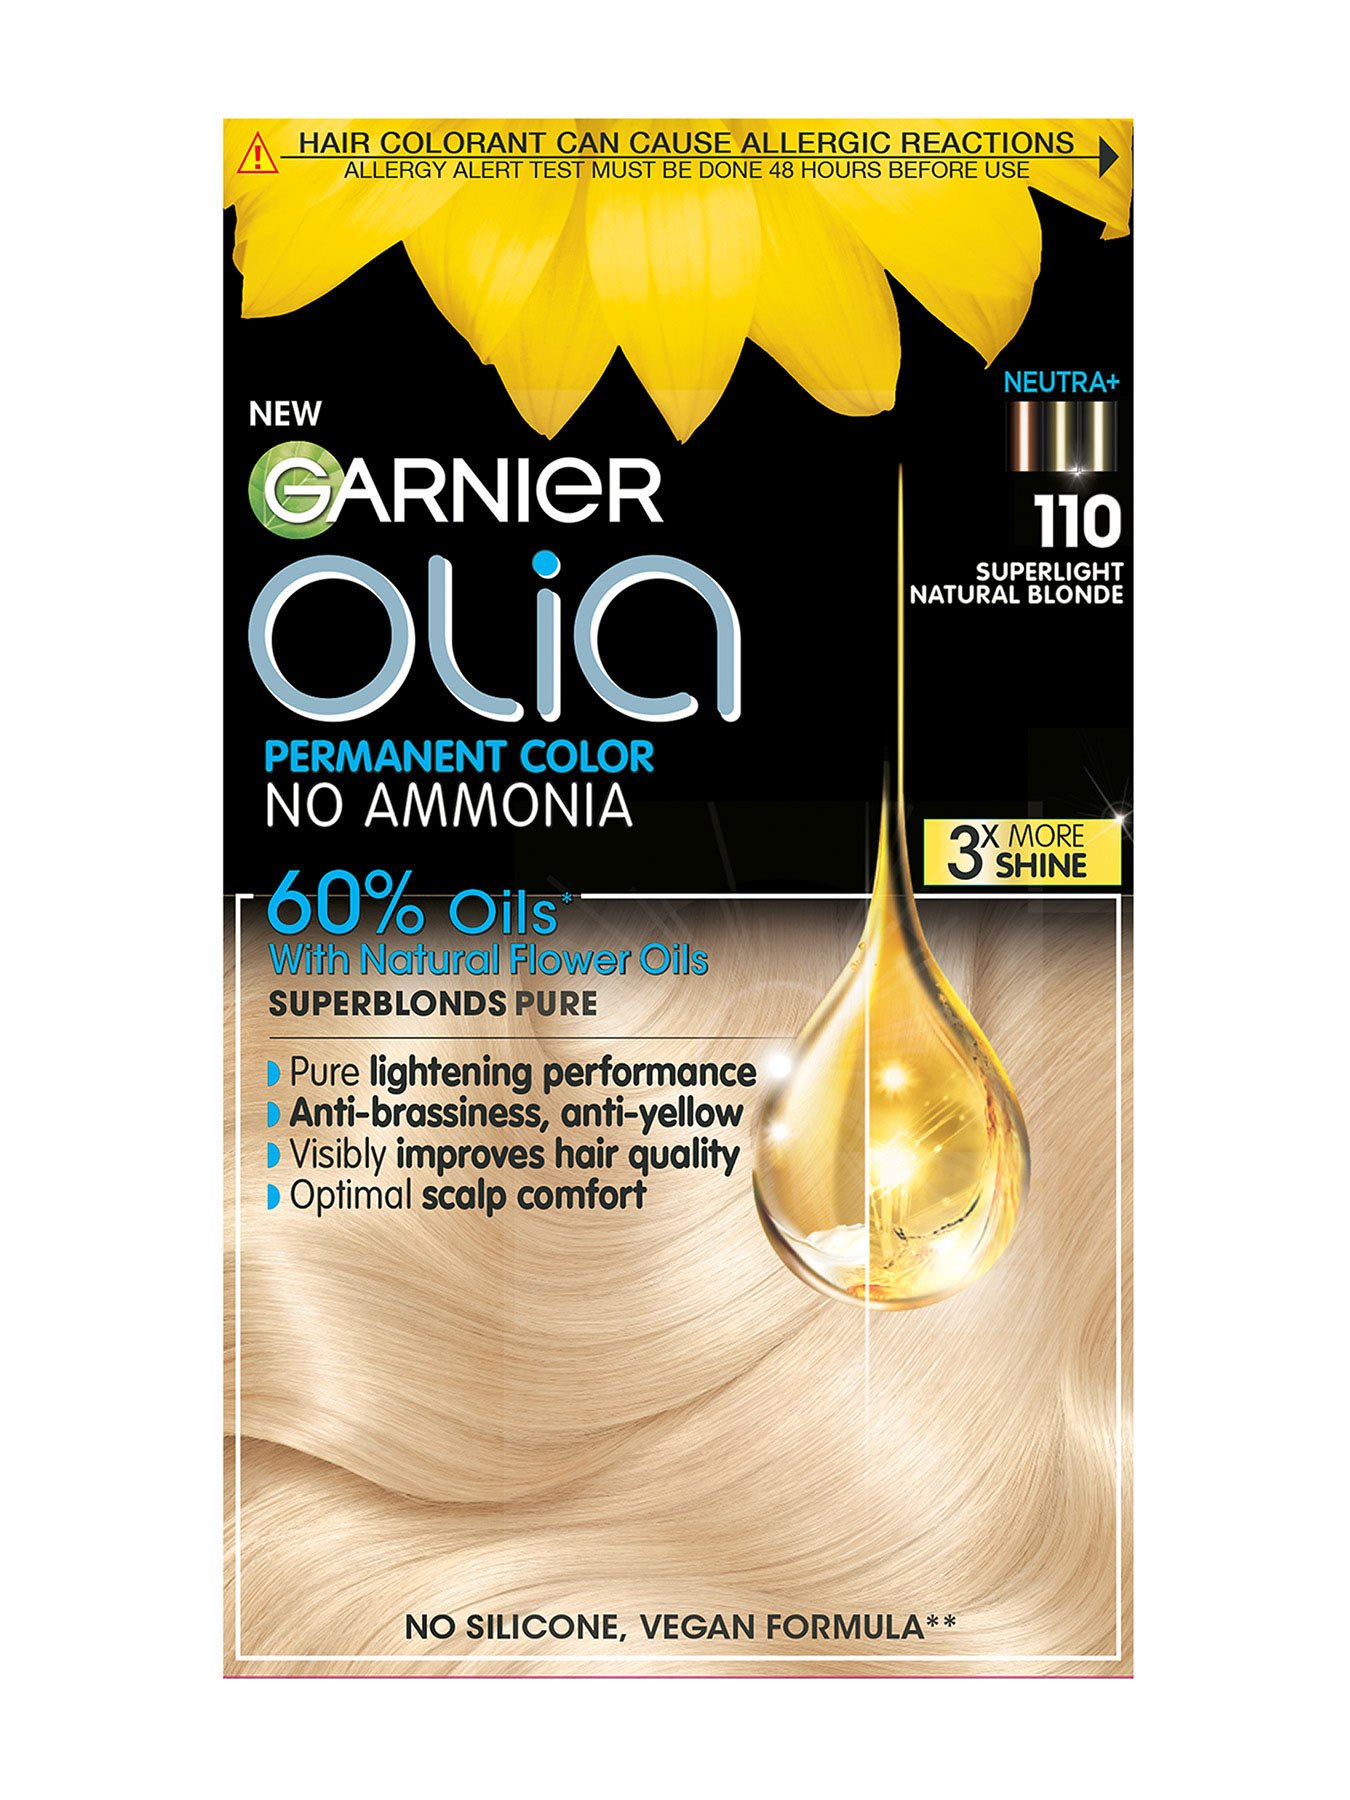 Garnier Olia 110 Super svetla naravna blond